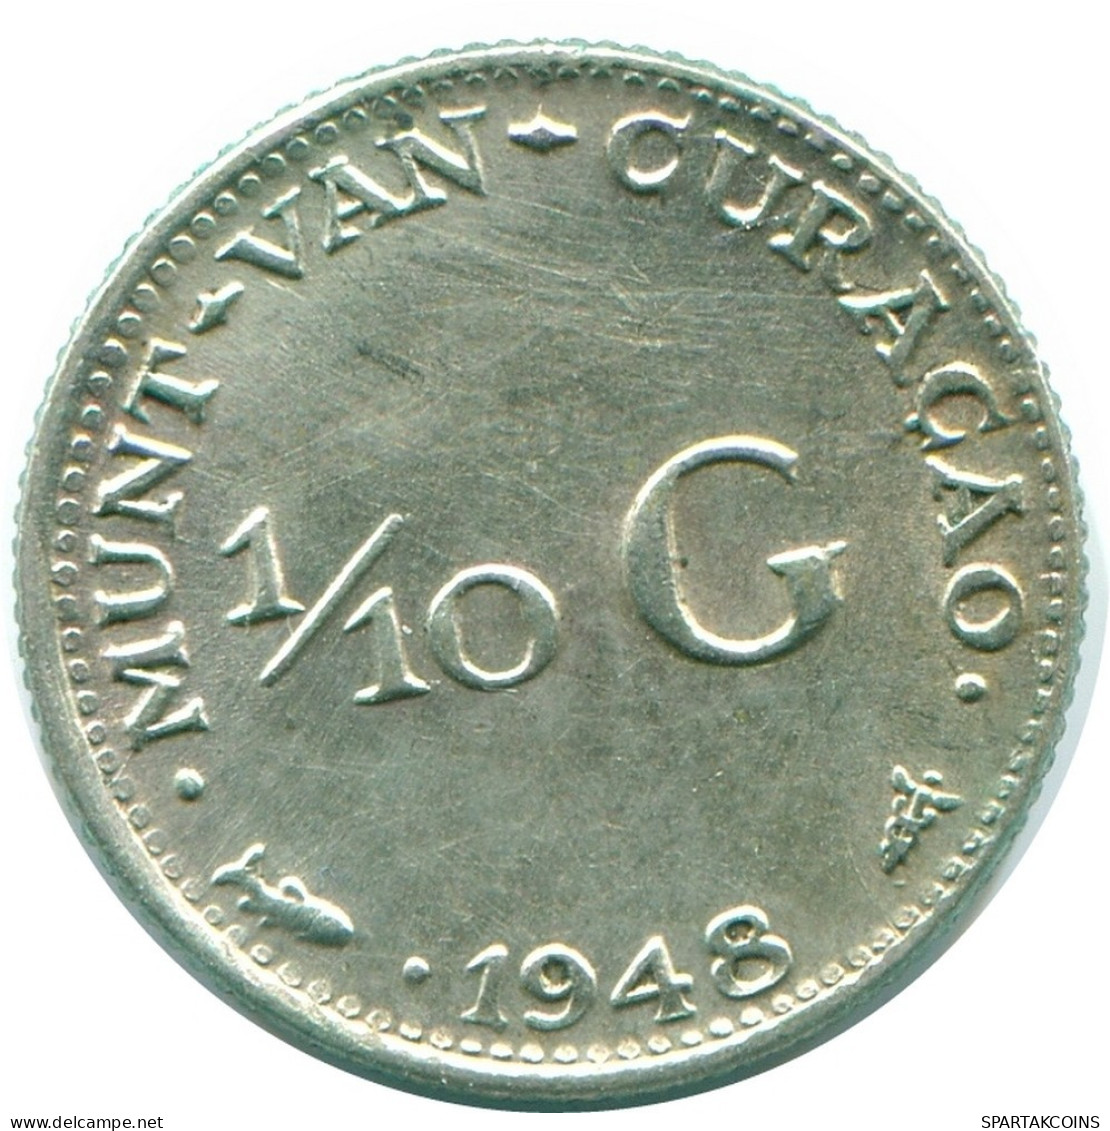 1/10 GULDEN 1948 CURACAO NIEDERLANDE SILBER Koloniale Münze #NL11915.3.D.A - Curaçao